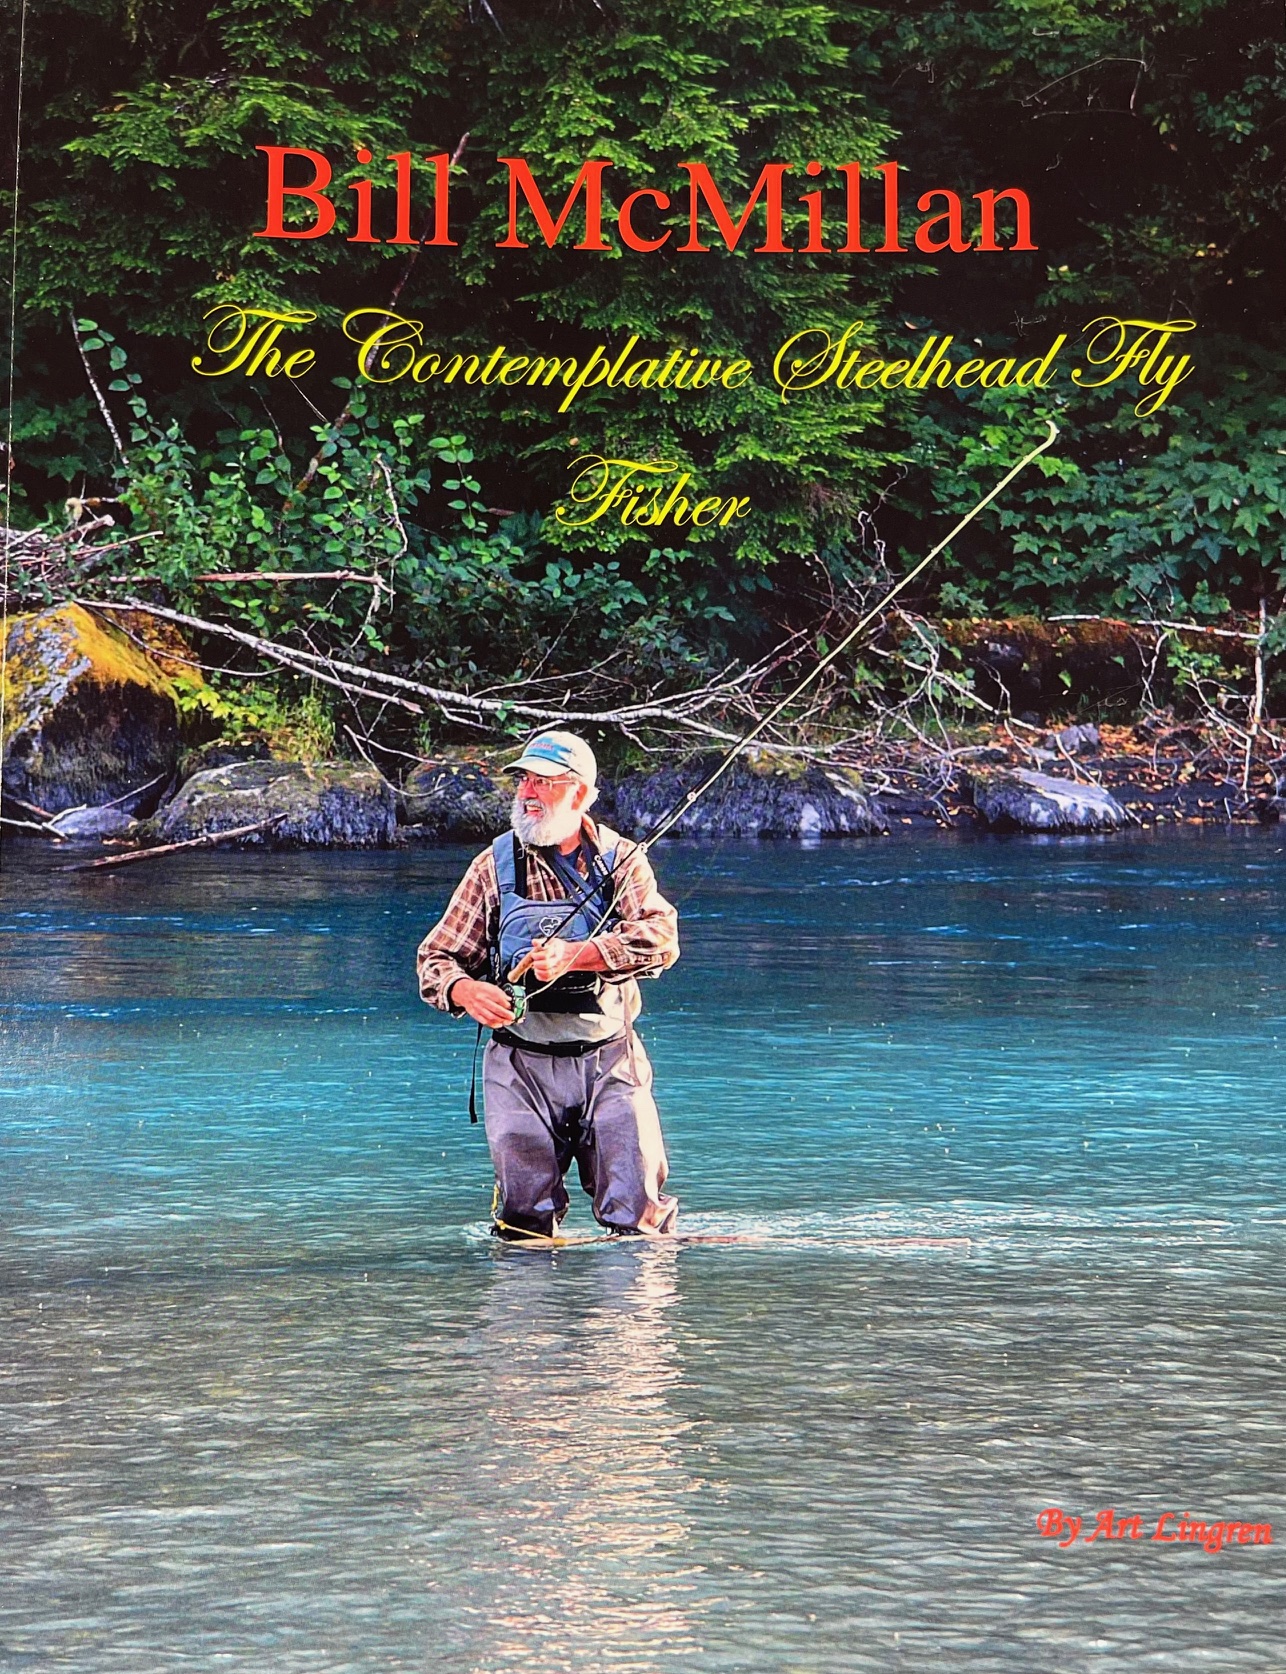 Bill McMillan - The Contemplative Steelhead Fly Fisher, By Art Lingren